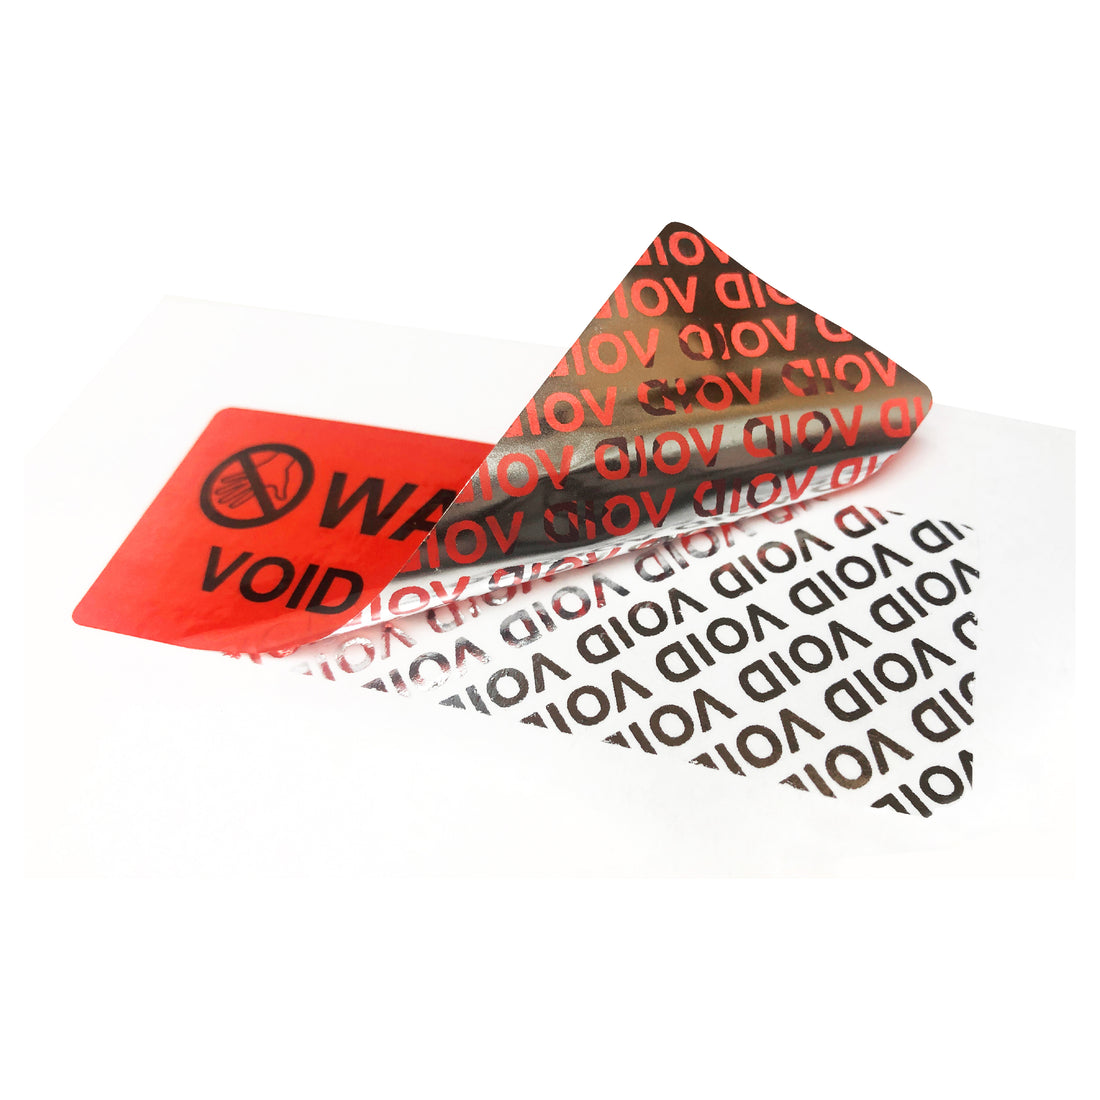 Security Seal Warranty Void Sticker Label 安全防護封條標籤貼紙